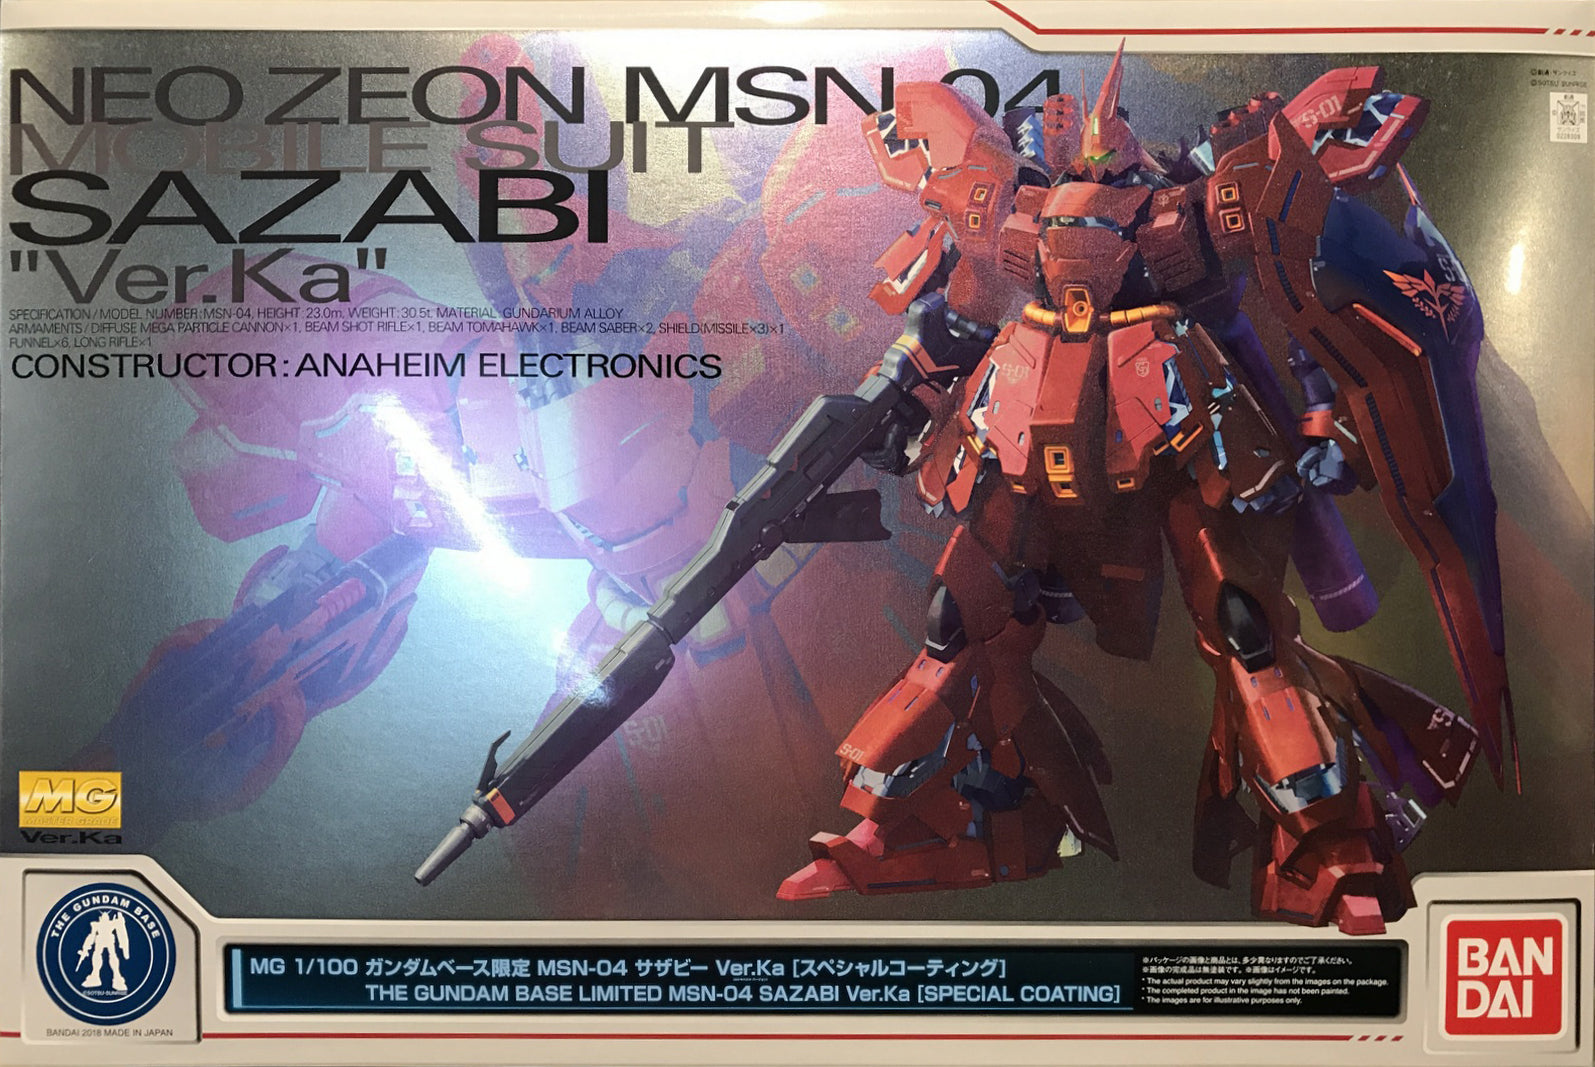 Gundam 1/100 MG MSN-04 Sazabi Ver. Ka Special Coating Ver. Gundam Base Exclusive Model Kit